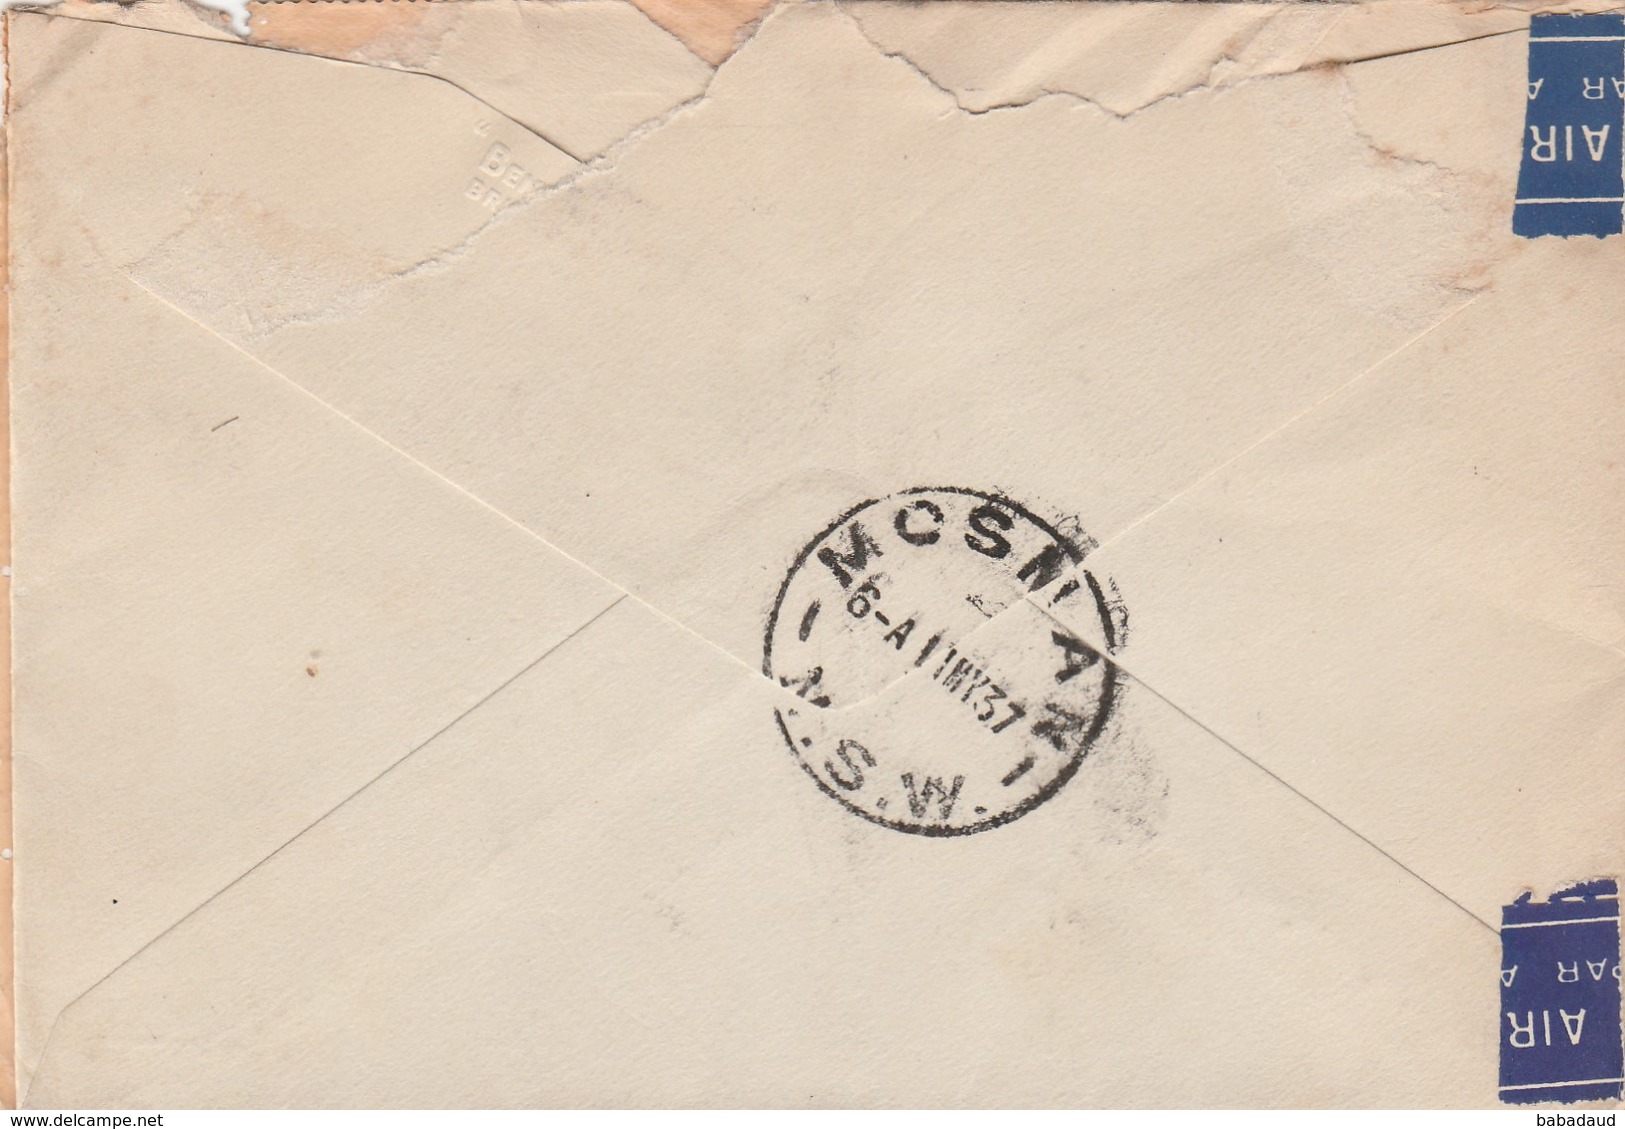 Great Britain, EVIIIR, 1'3 Air Mail LEEDS 28 AP 37 > Australai - MOSMAN N.S.W. 11 MY 37 - Covers & Documents